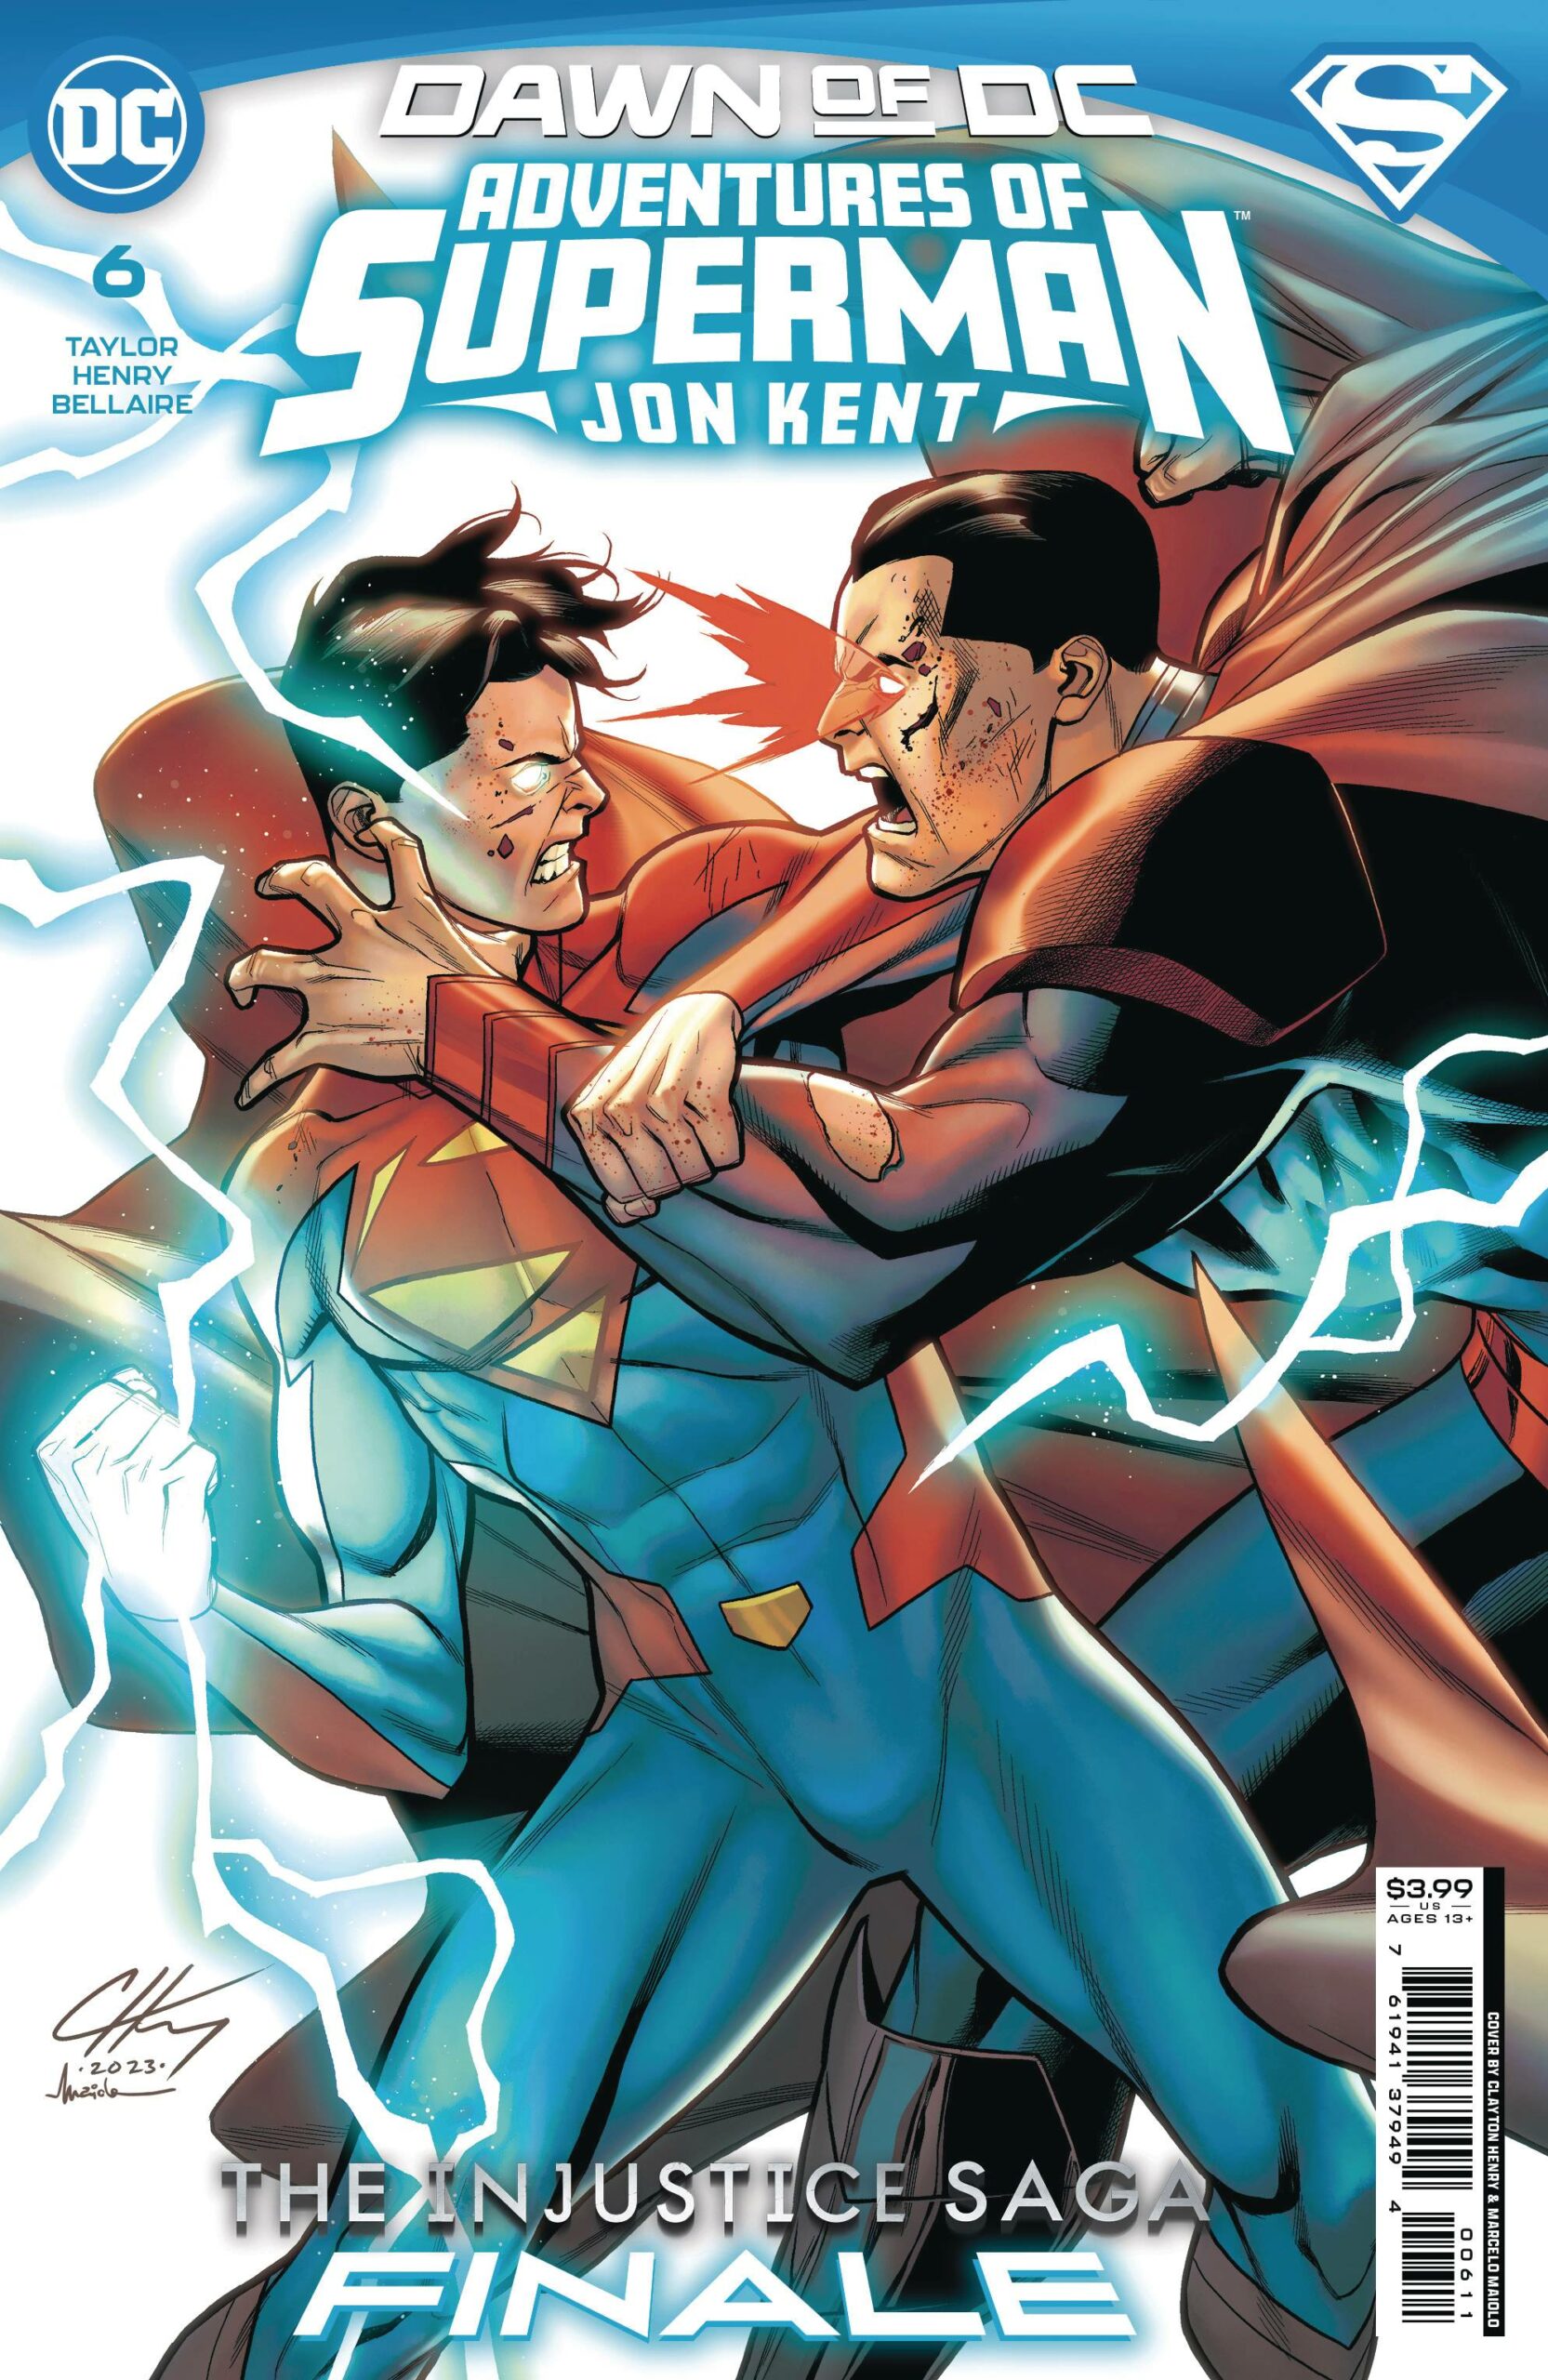 ADVENTURES OF SUPERMAN JON KENT #6 (OF 6) CVR A HENRY